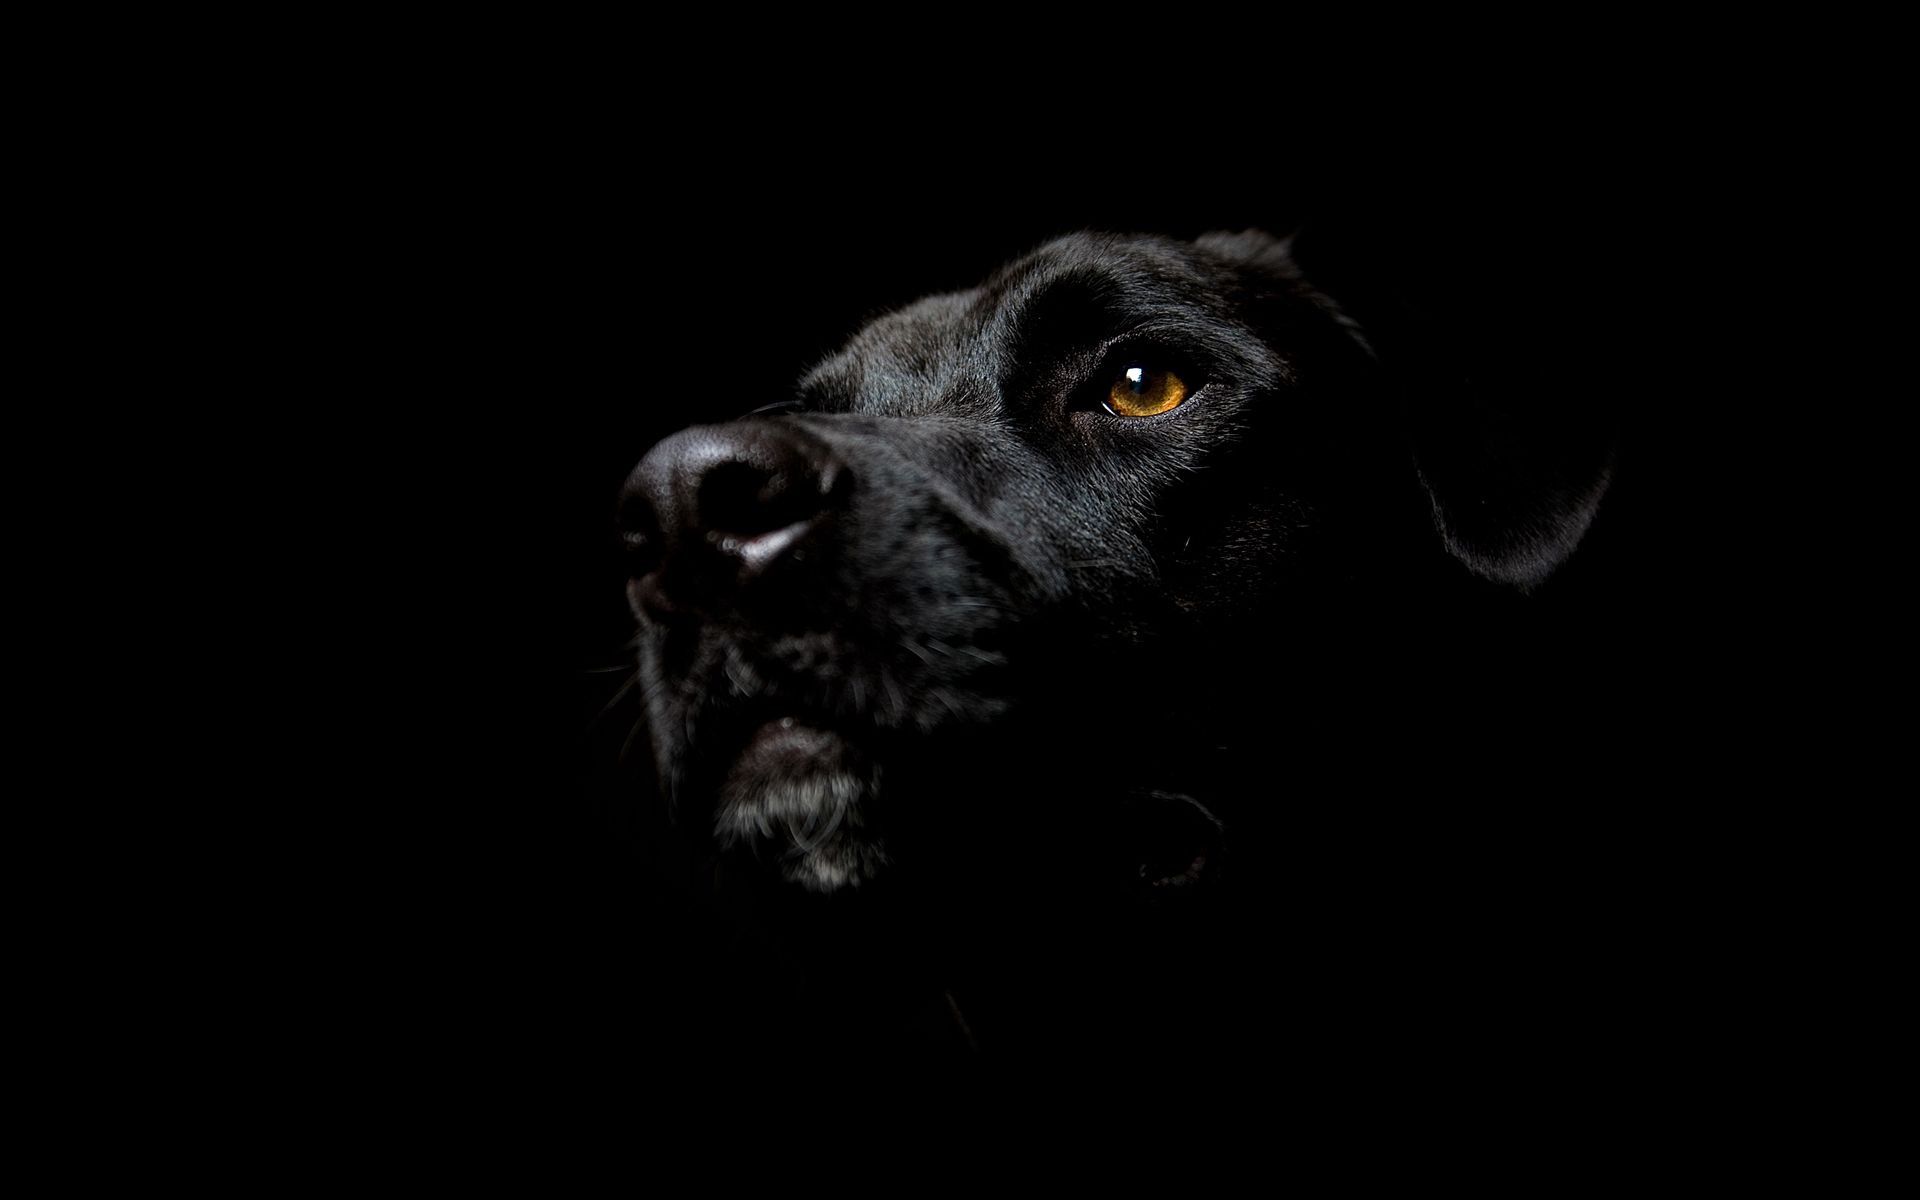 119664 descargar imagen fondo oscuro, negro, oscuro, perro: fondos de pantalla y protectores de pantalla gratis